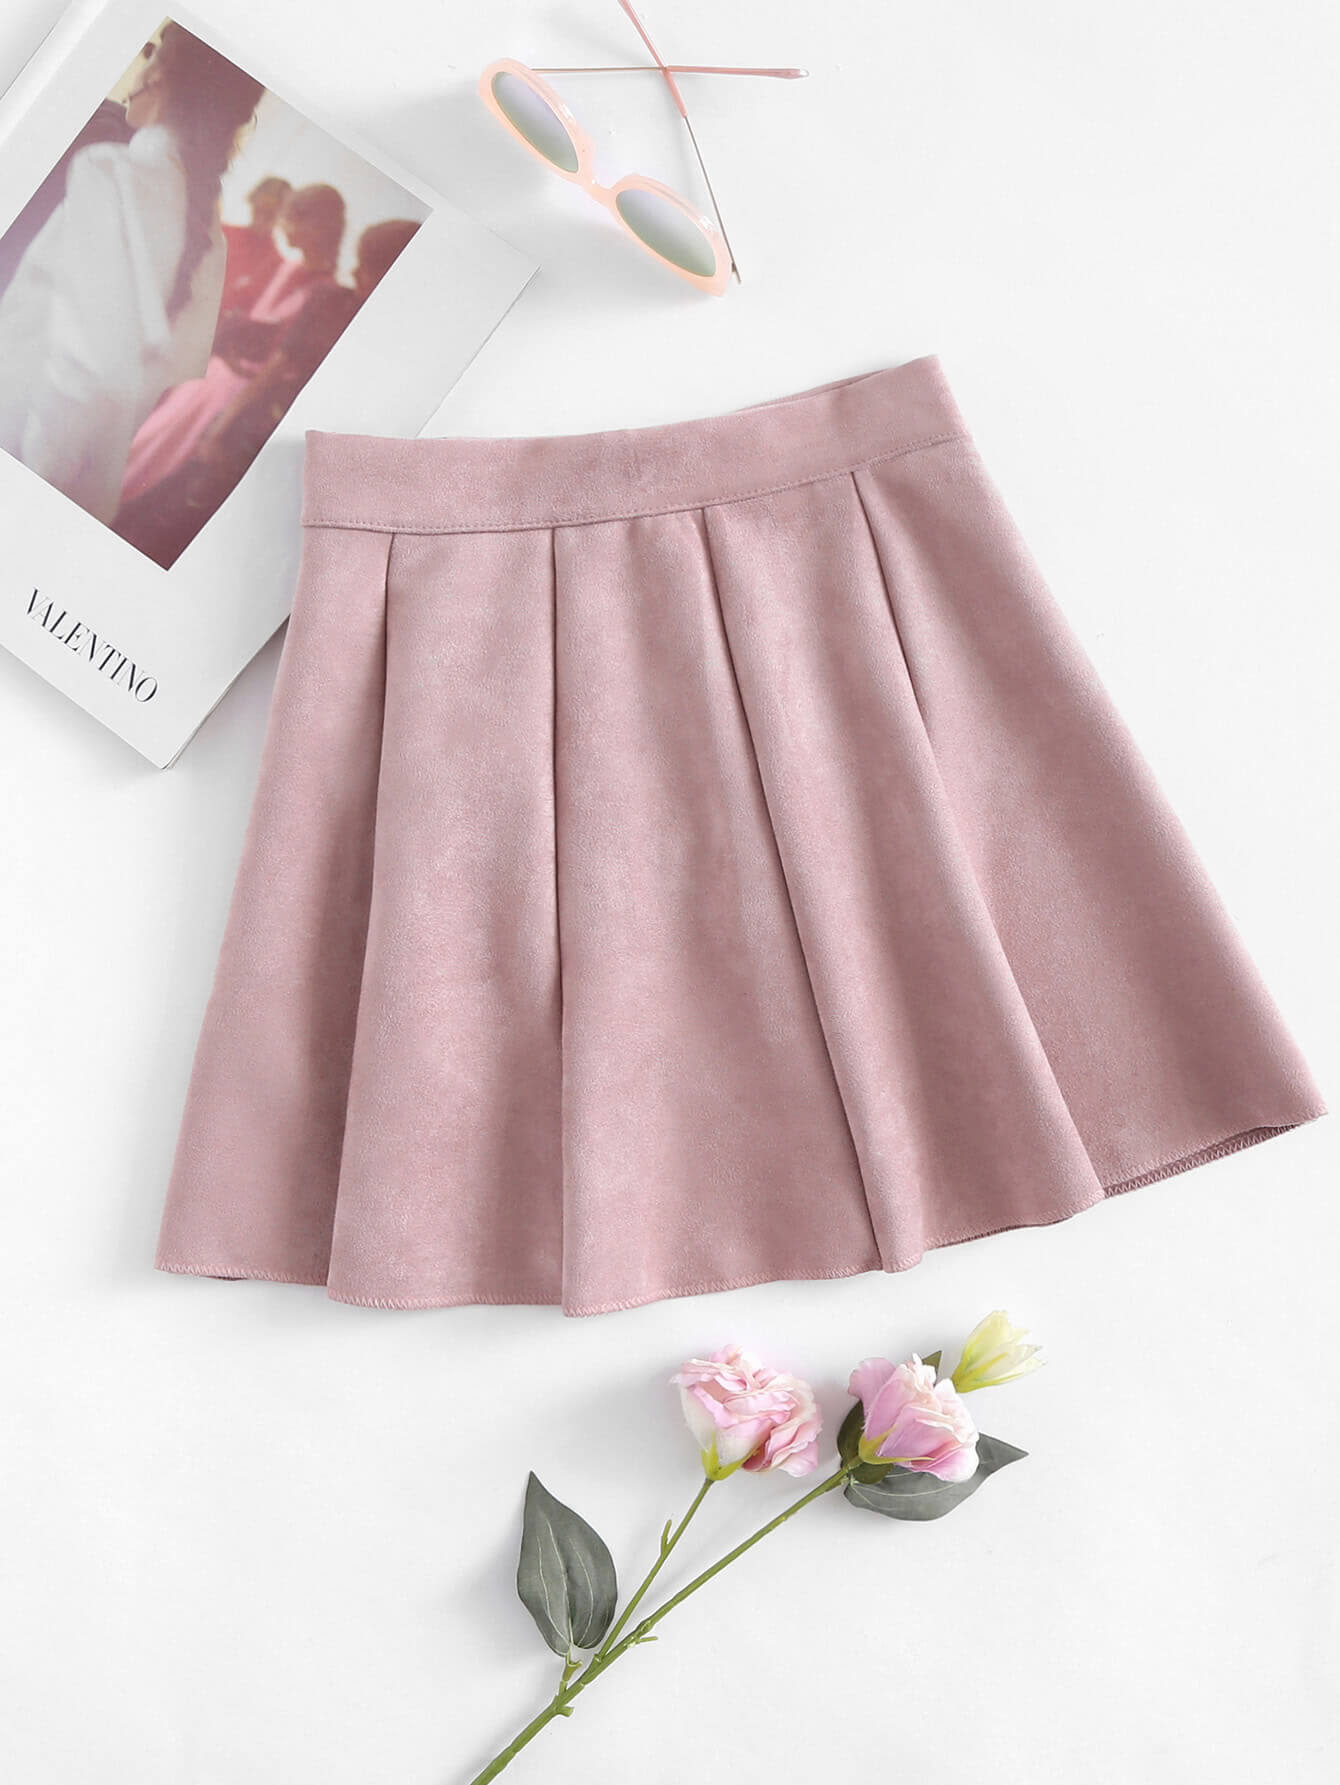 Glosario de tipos de faldas | Blog de DSIGNO